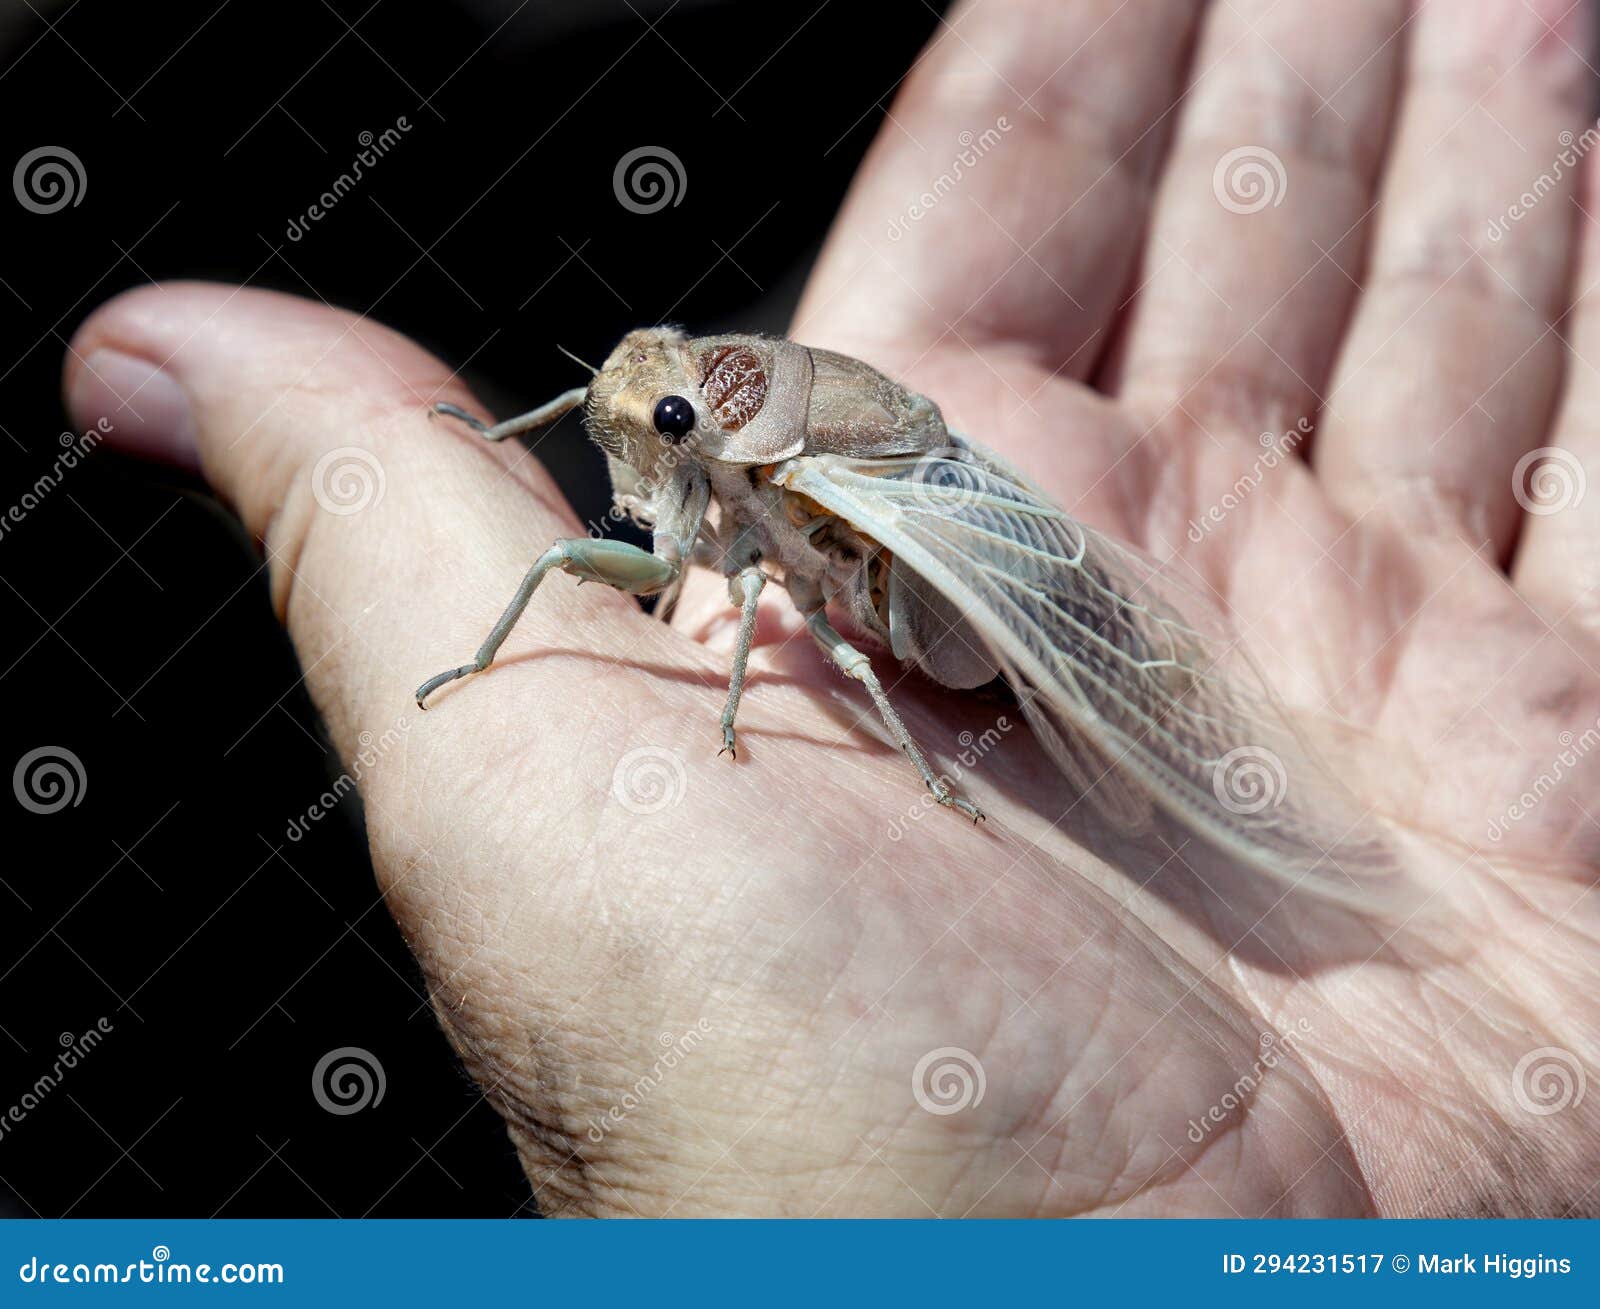 cicada emerges after hibernation